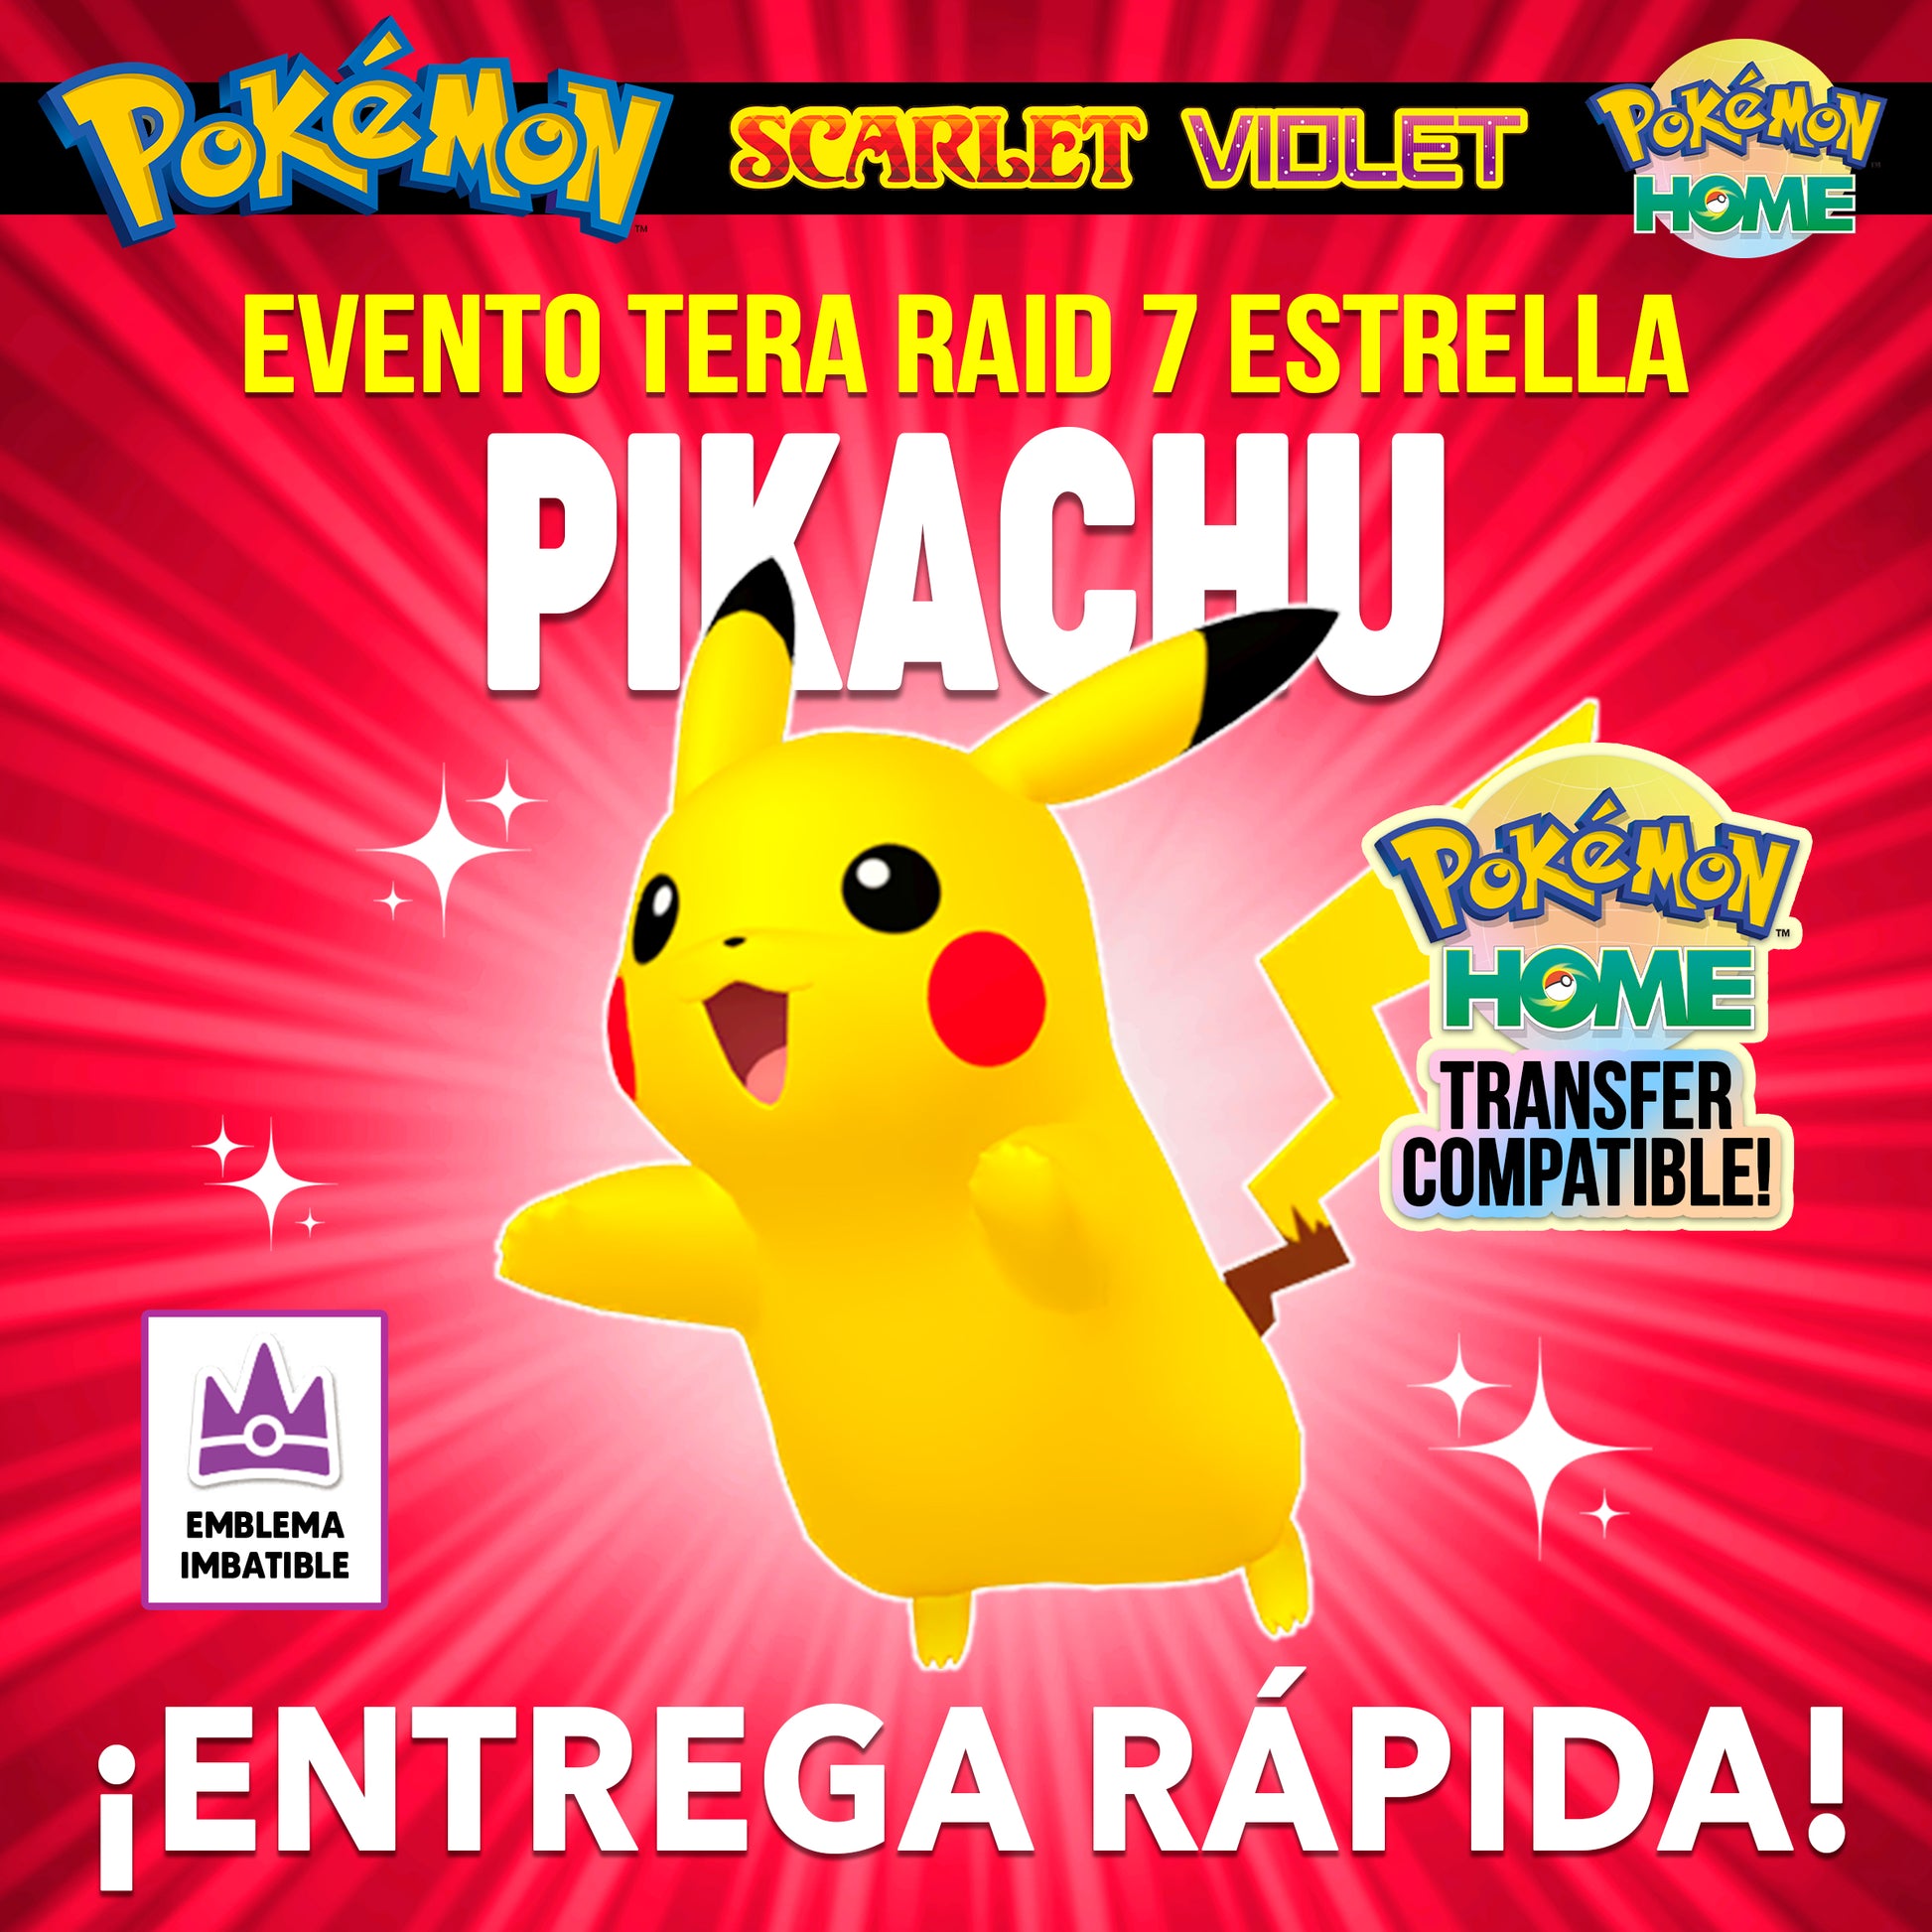 #0025 - Pikachu Imbatible 6IV Evento Teraincursión 7 Estrellas ShinyAsh